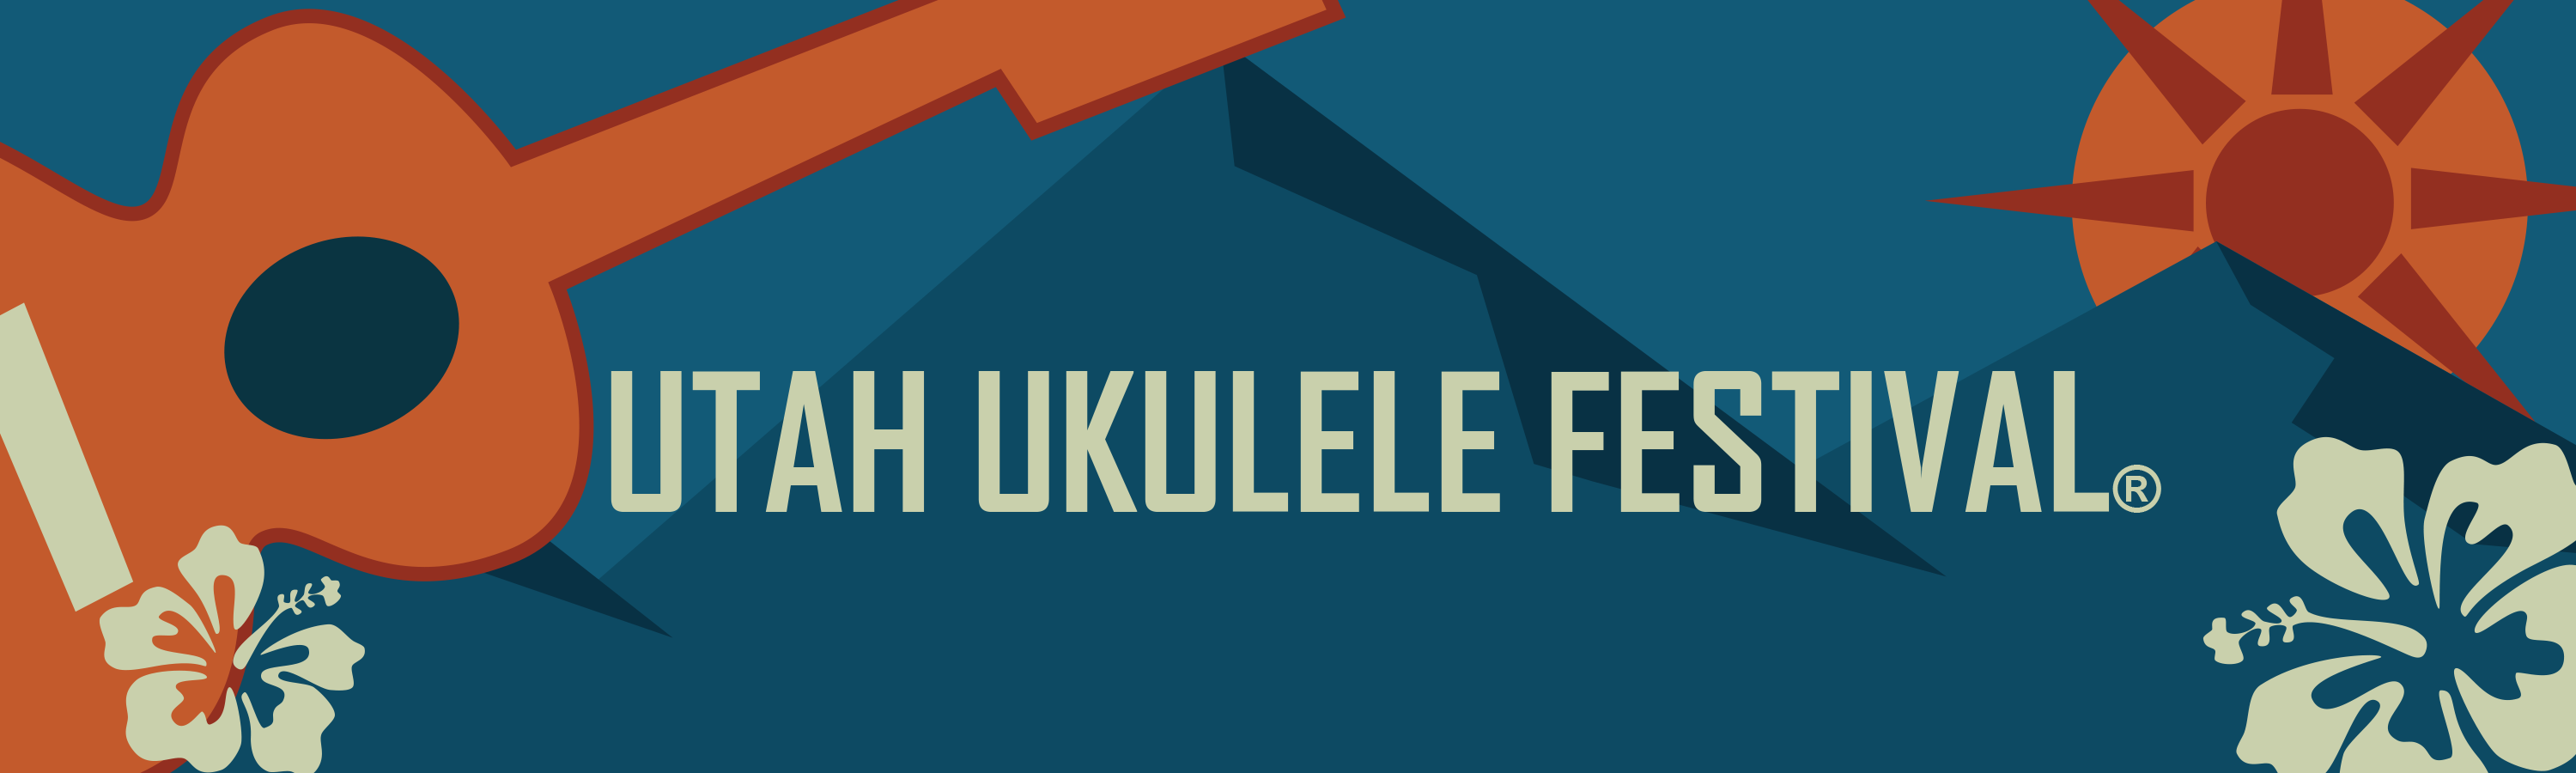 Utah Ukulele Festival ®